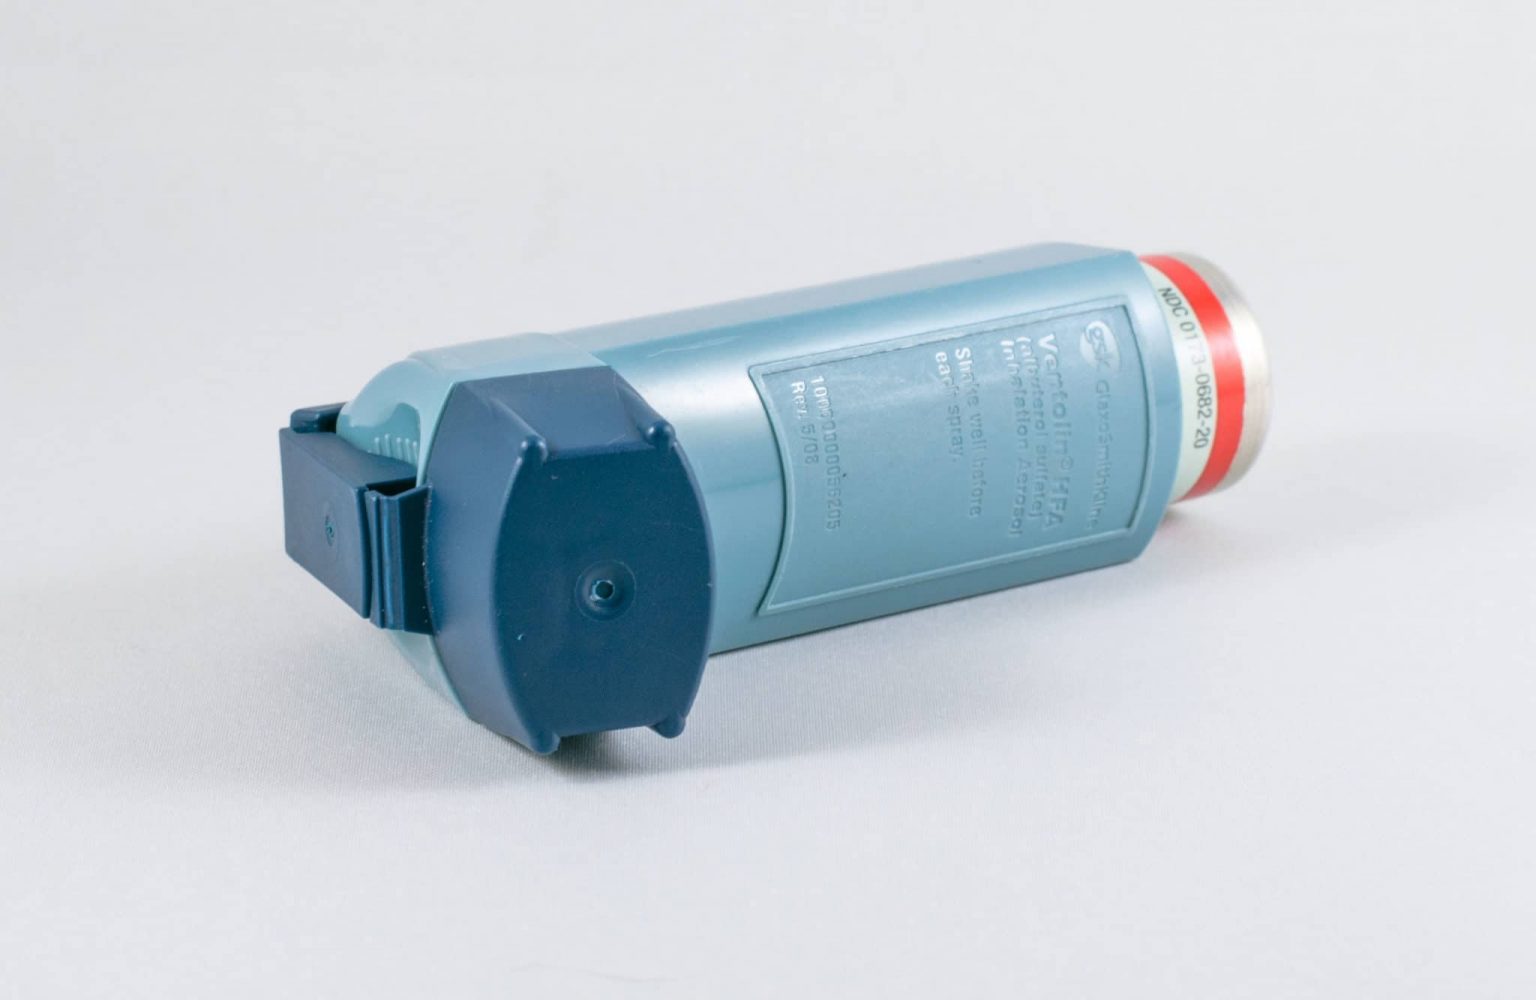 A blue plastic asthma inhaler on its side